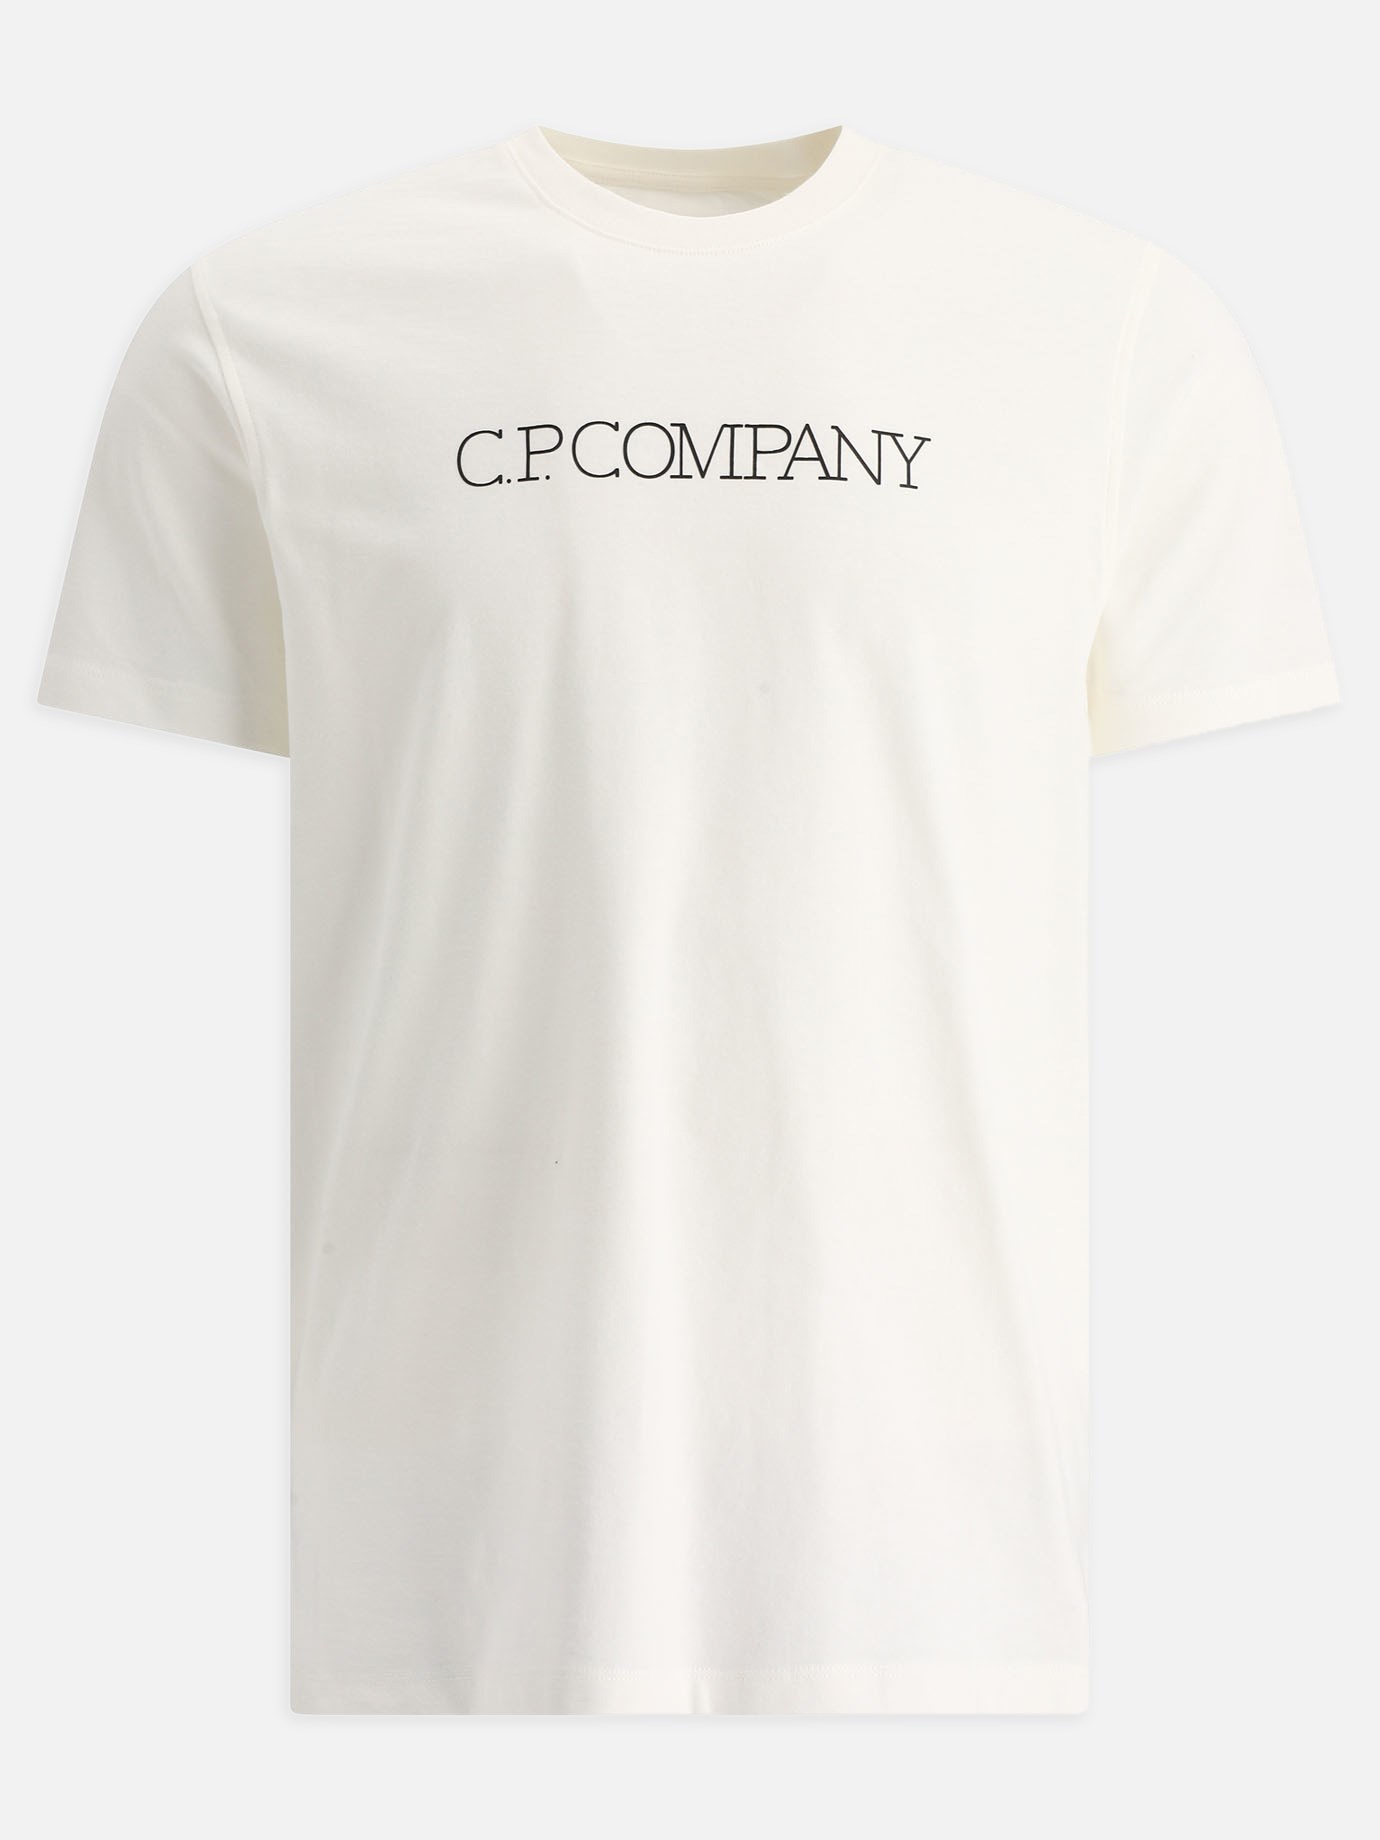  Tonal Logo  t-shirtby C.P. Company - 2